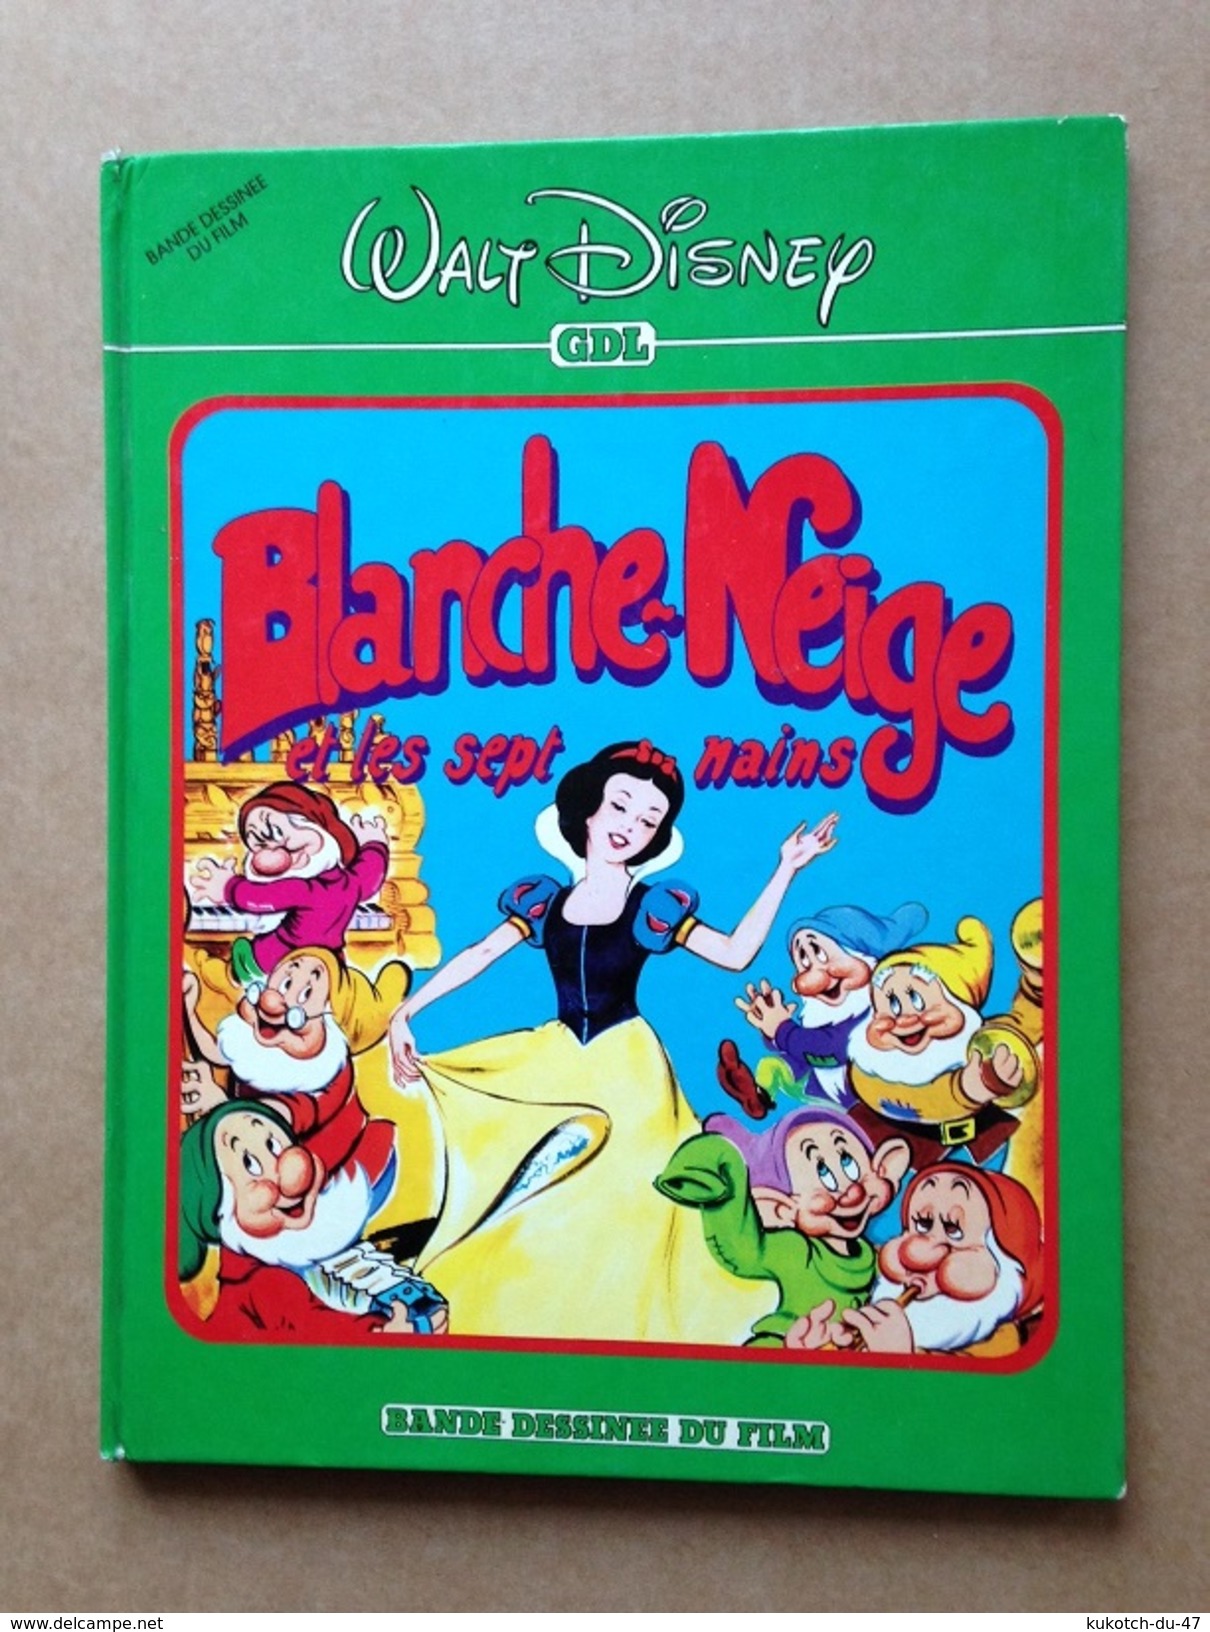 Disney - BD Blanche-Neige (1983) - Disney